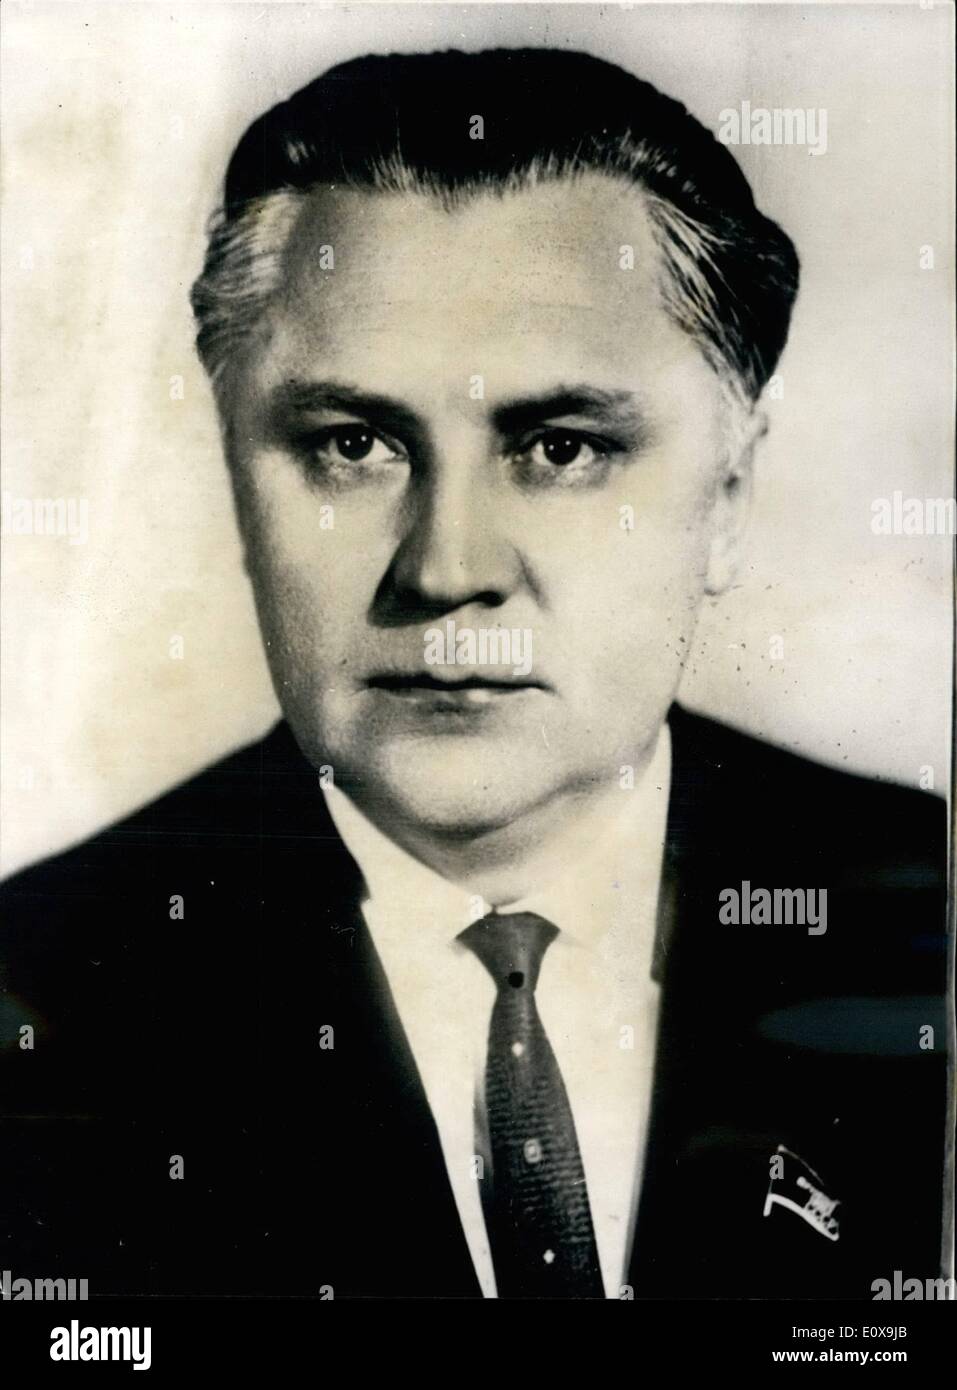 Dec. 12, 1965 - New member of soviet communist party party presidium: photo shows A recent portrait of Vladimir shcjernotski, the newly appointed member of the soviet communist party presidium. Stock Photo